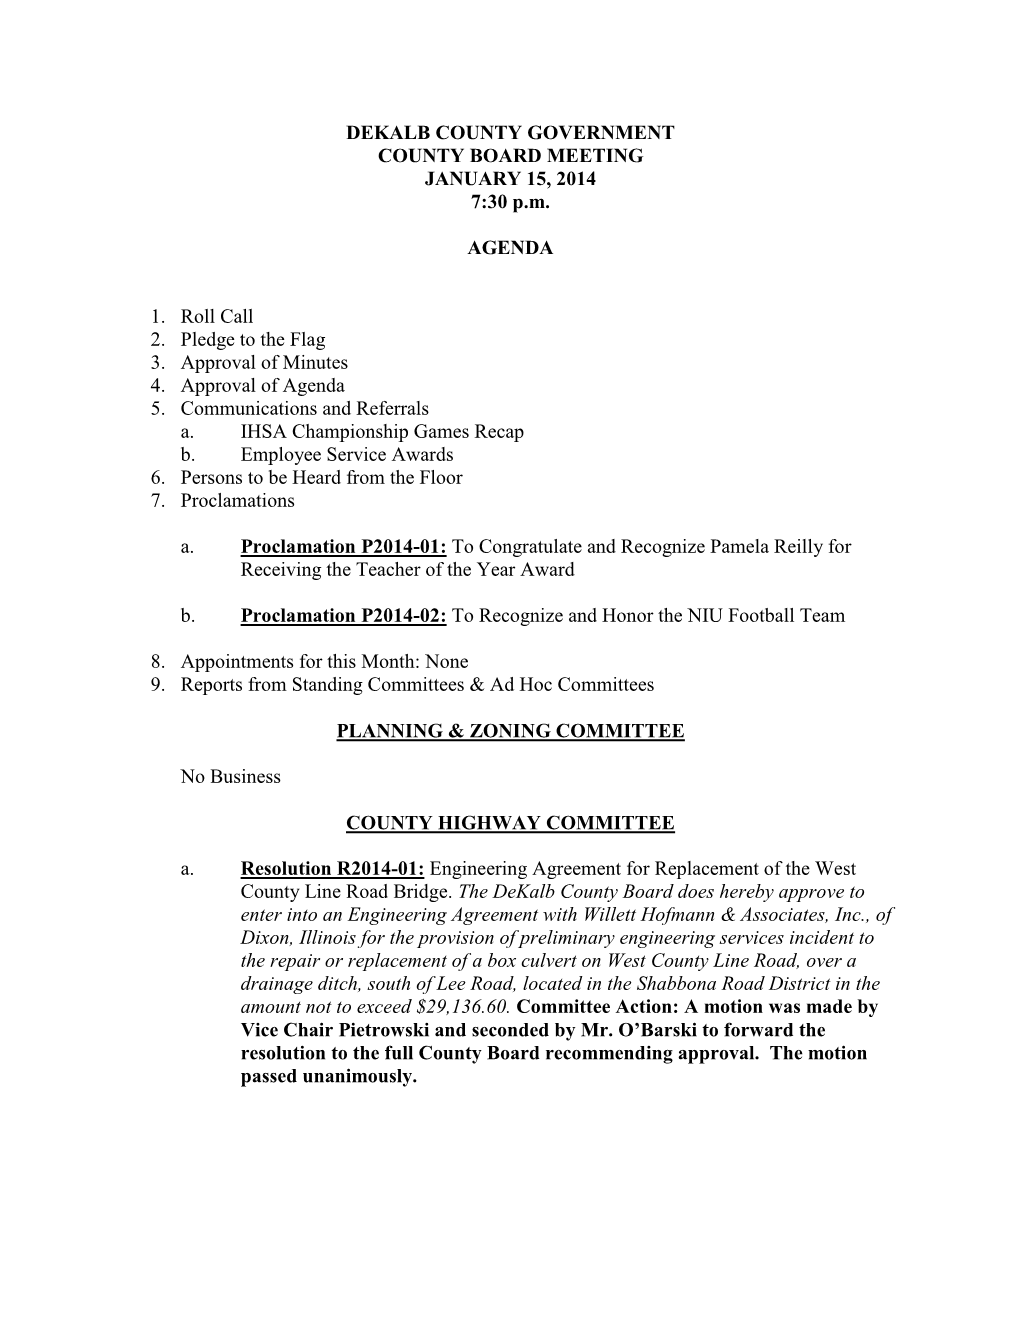 Dekalb County Board Packet -January 2014